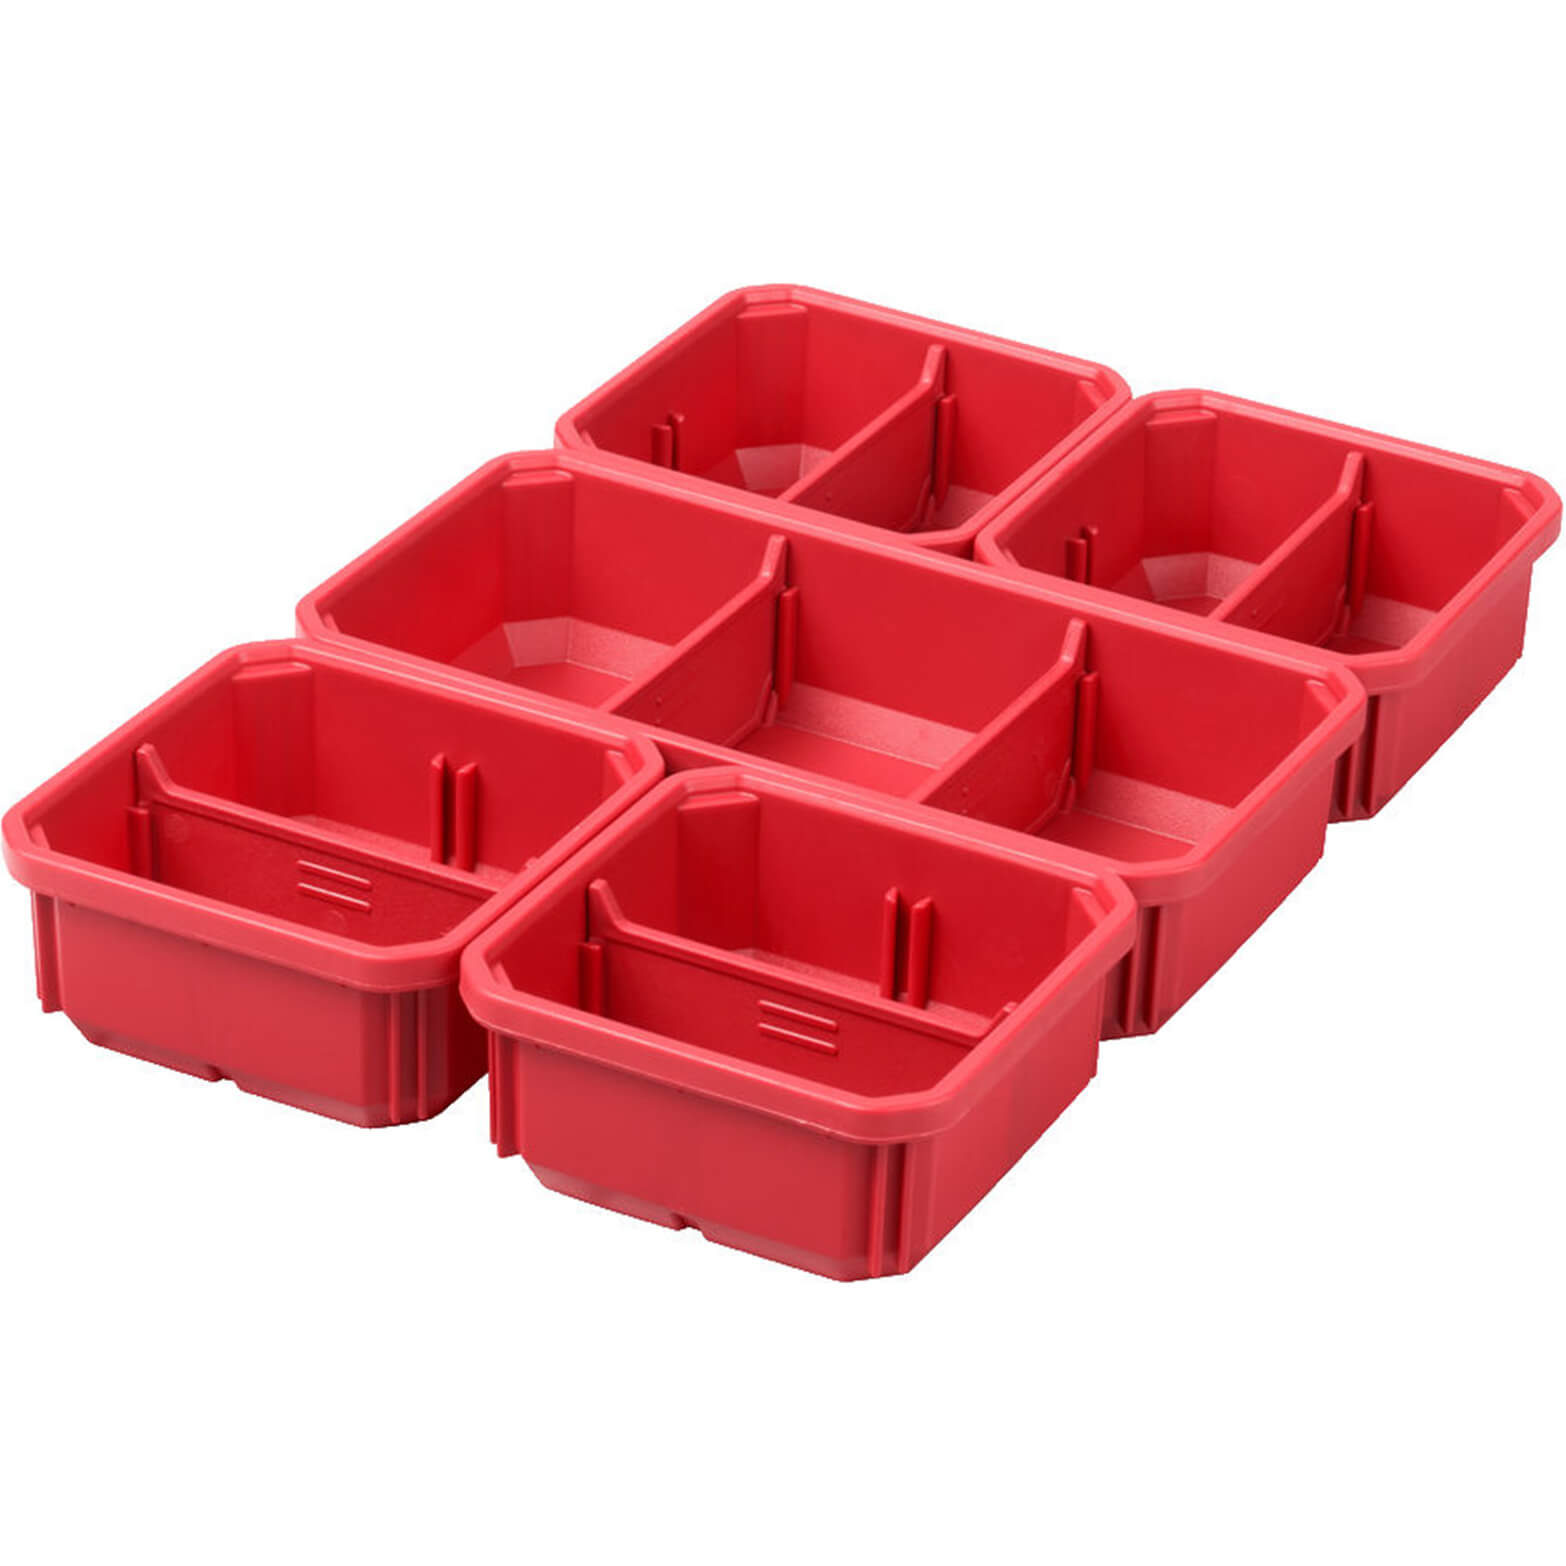 Photos - Tool Box Milwaukee Bins for Packout Slim Organizer and Compact Slim Organizer 49324 